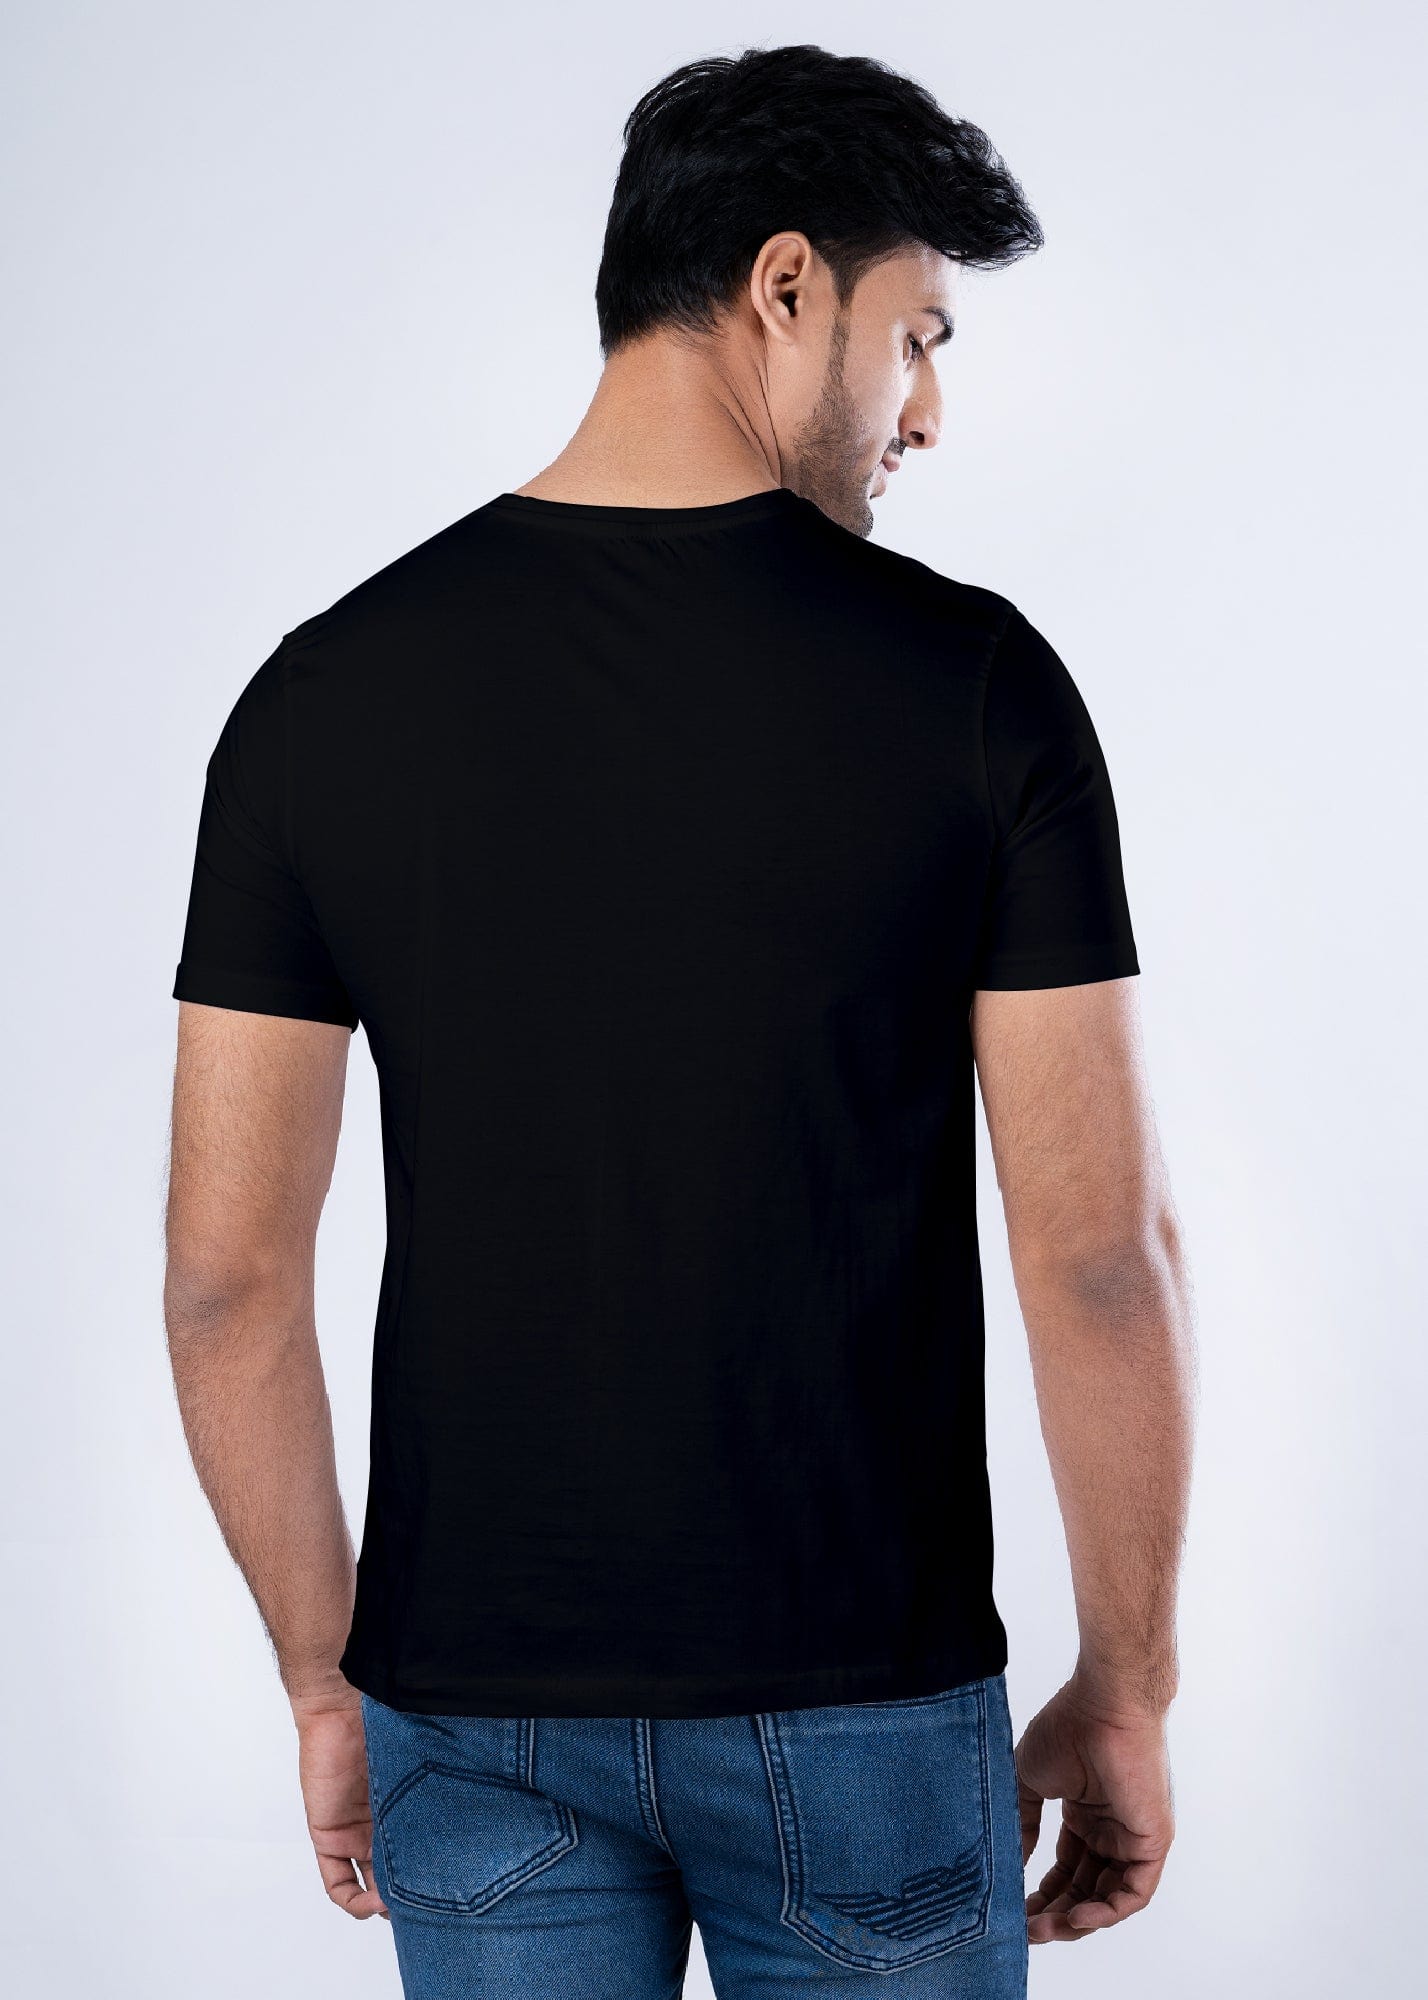 Main Jhukega Nahi Printed Half Sleeve Premium Cotton T-shirt For Men